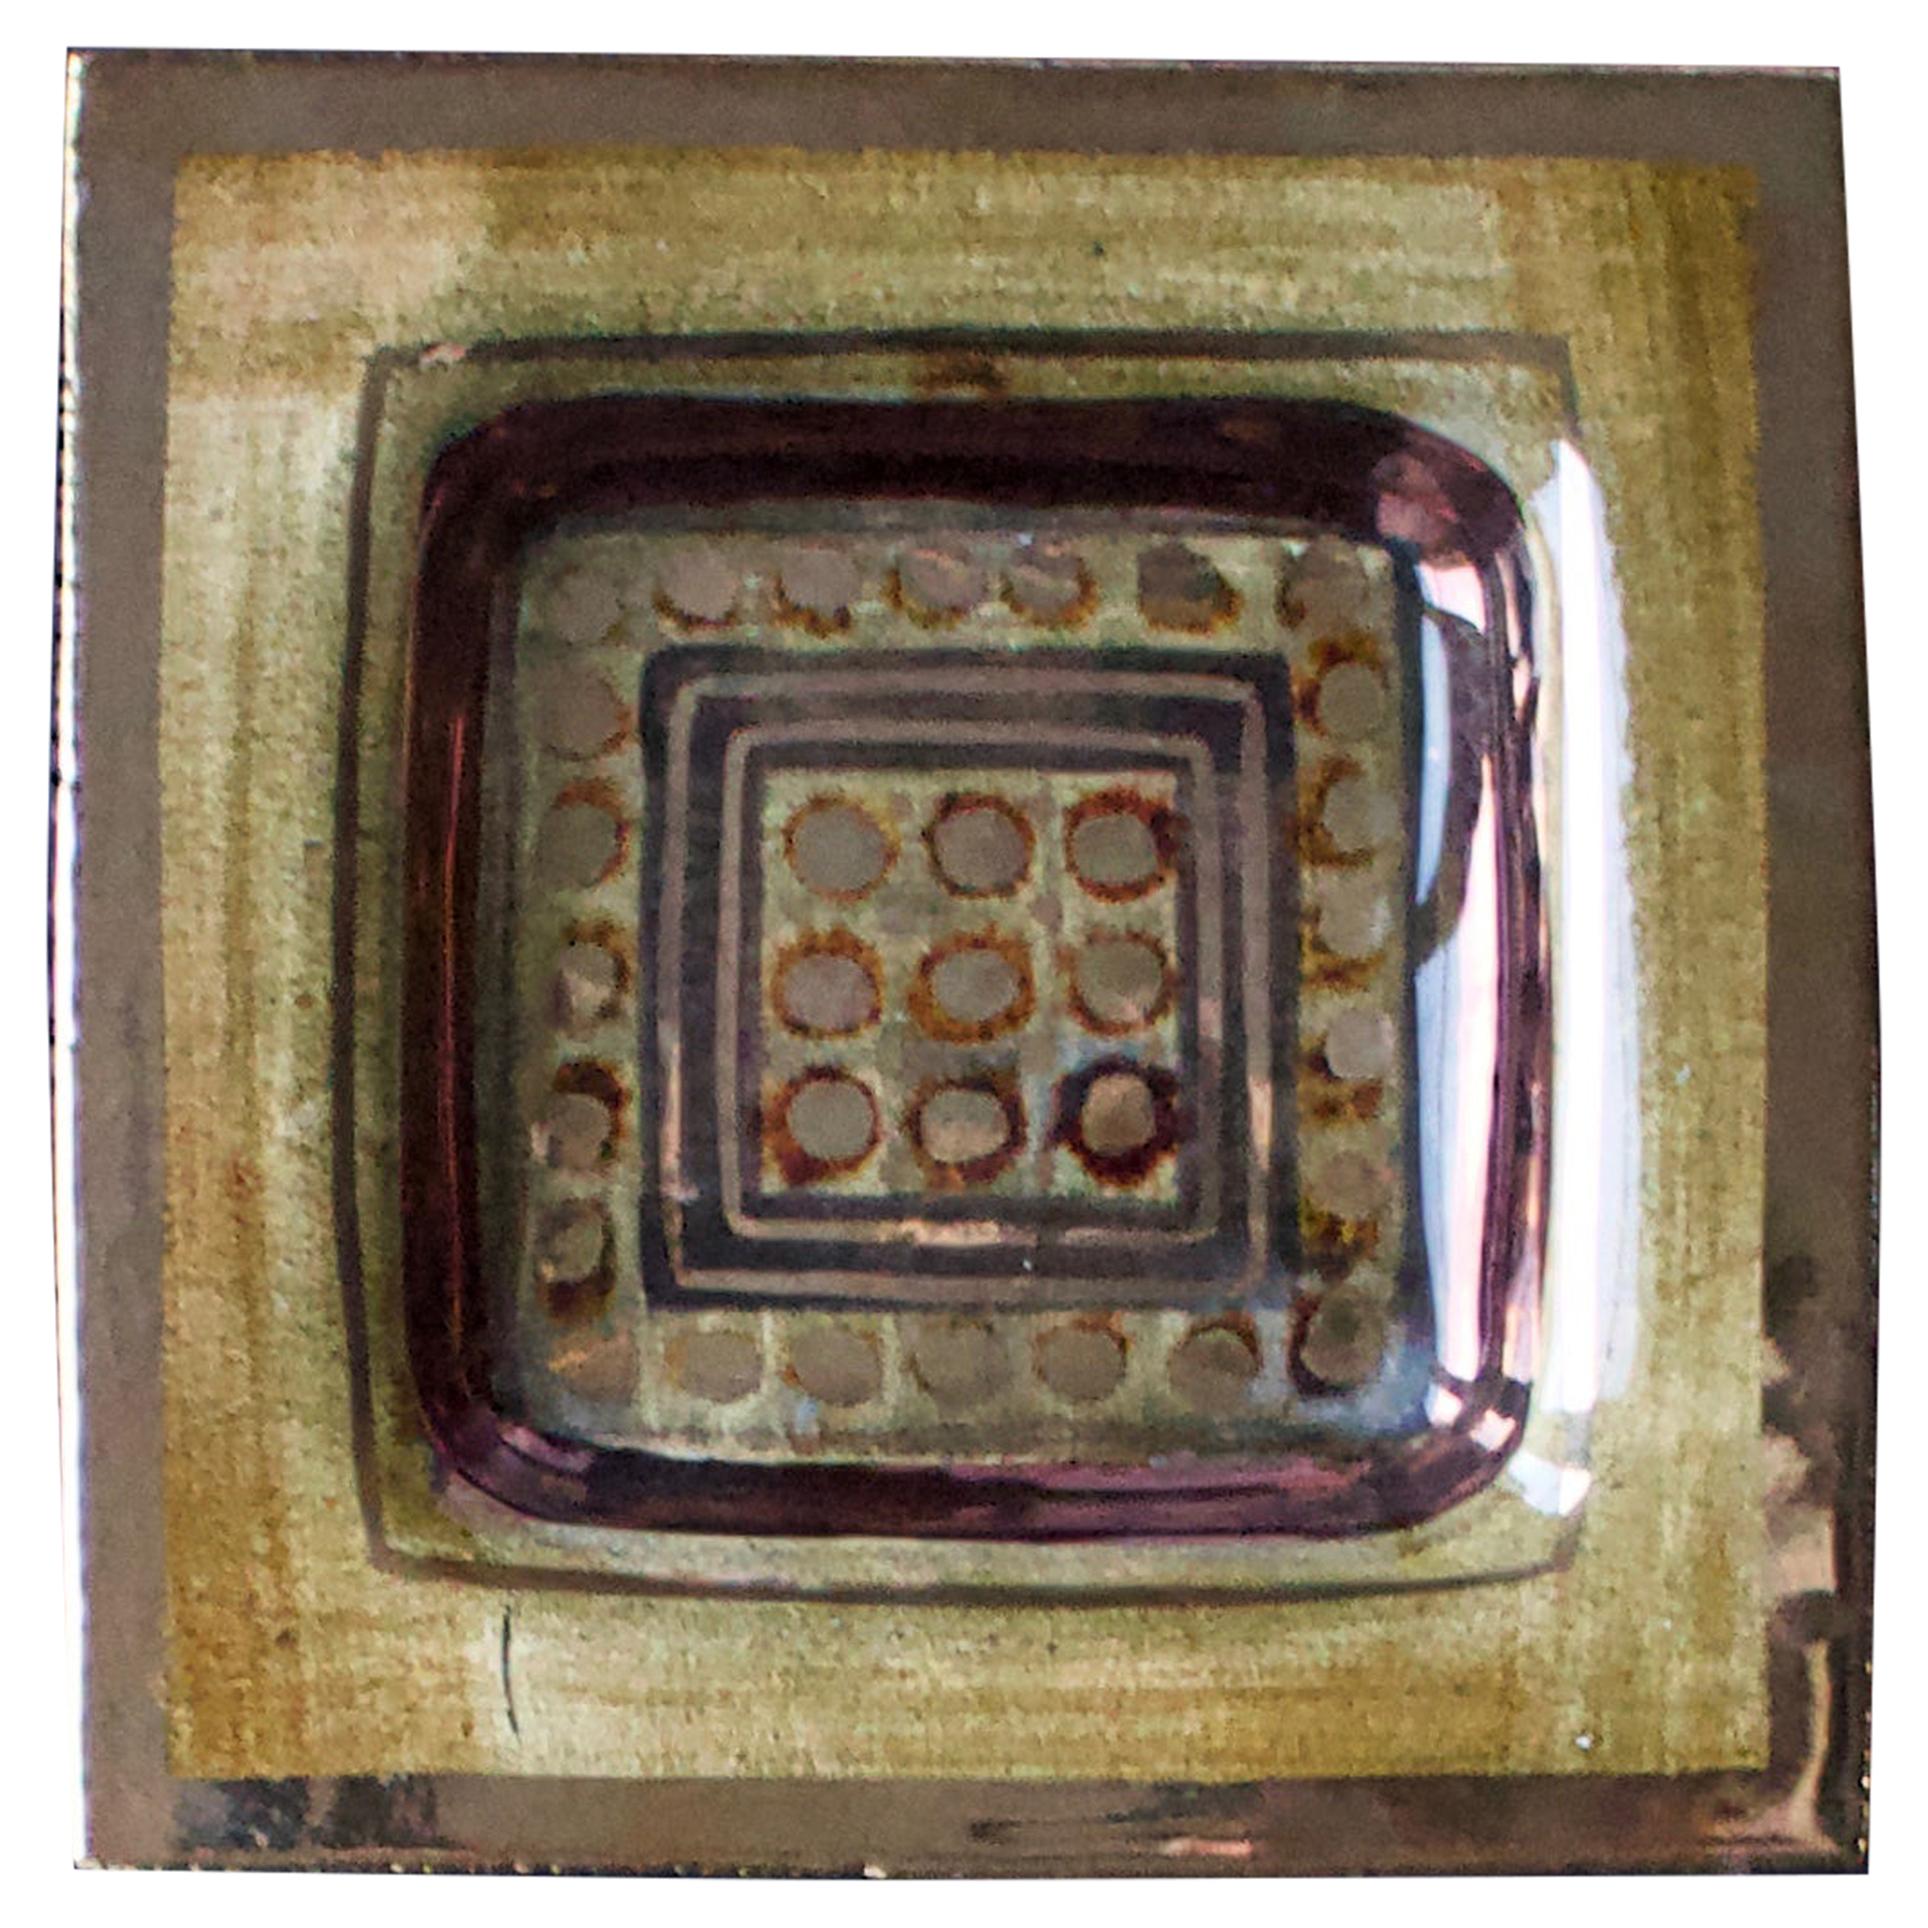 Pelletier Ceramic Vide-Poche or Decorative Plate in Deep Gold Tones, France